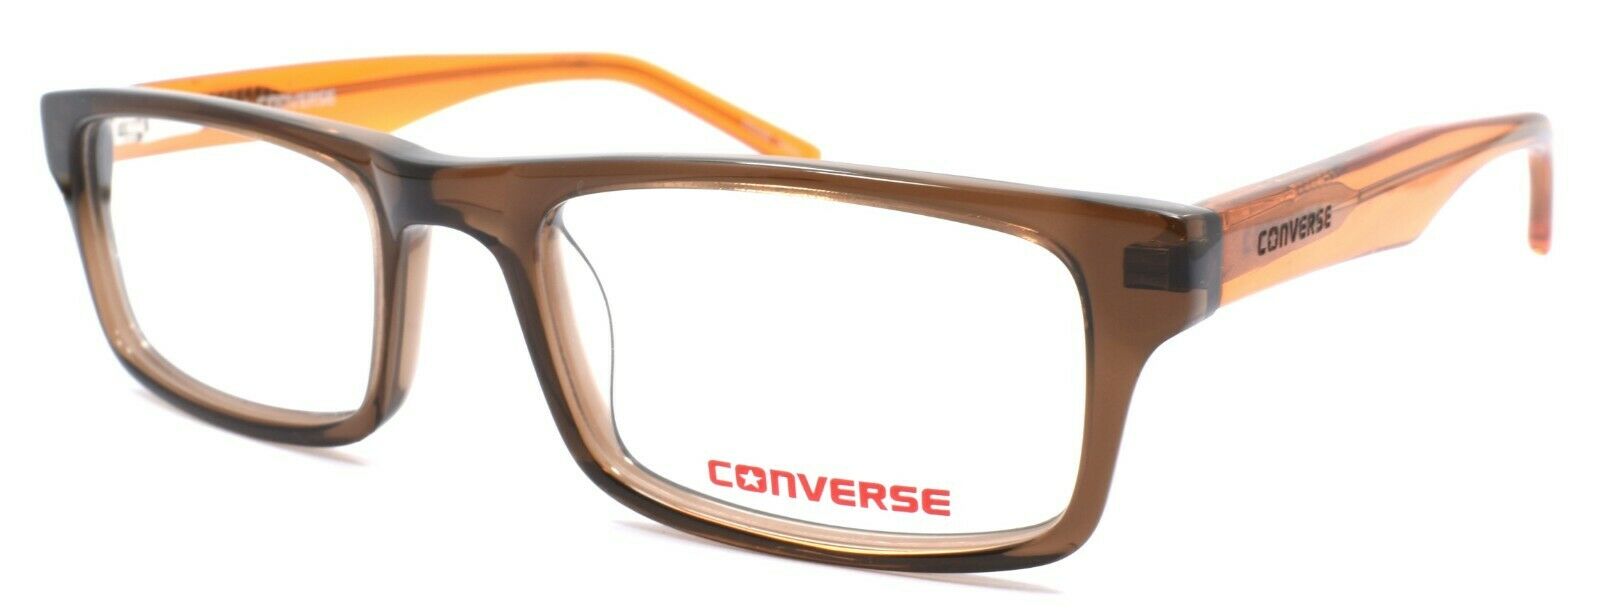 1-CONVERSE K003 Kids Eyeglasses Frames 48-17-135 Brown + CASE-751286247152-IKSpecs